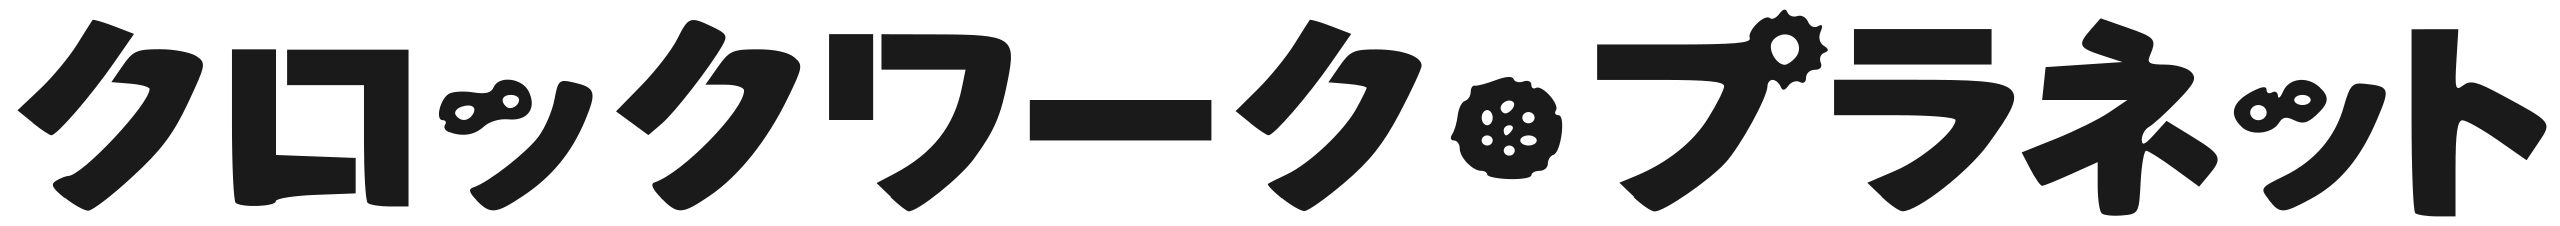 File:Clockwork Planet logo.svg - Wikimedia Commons